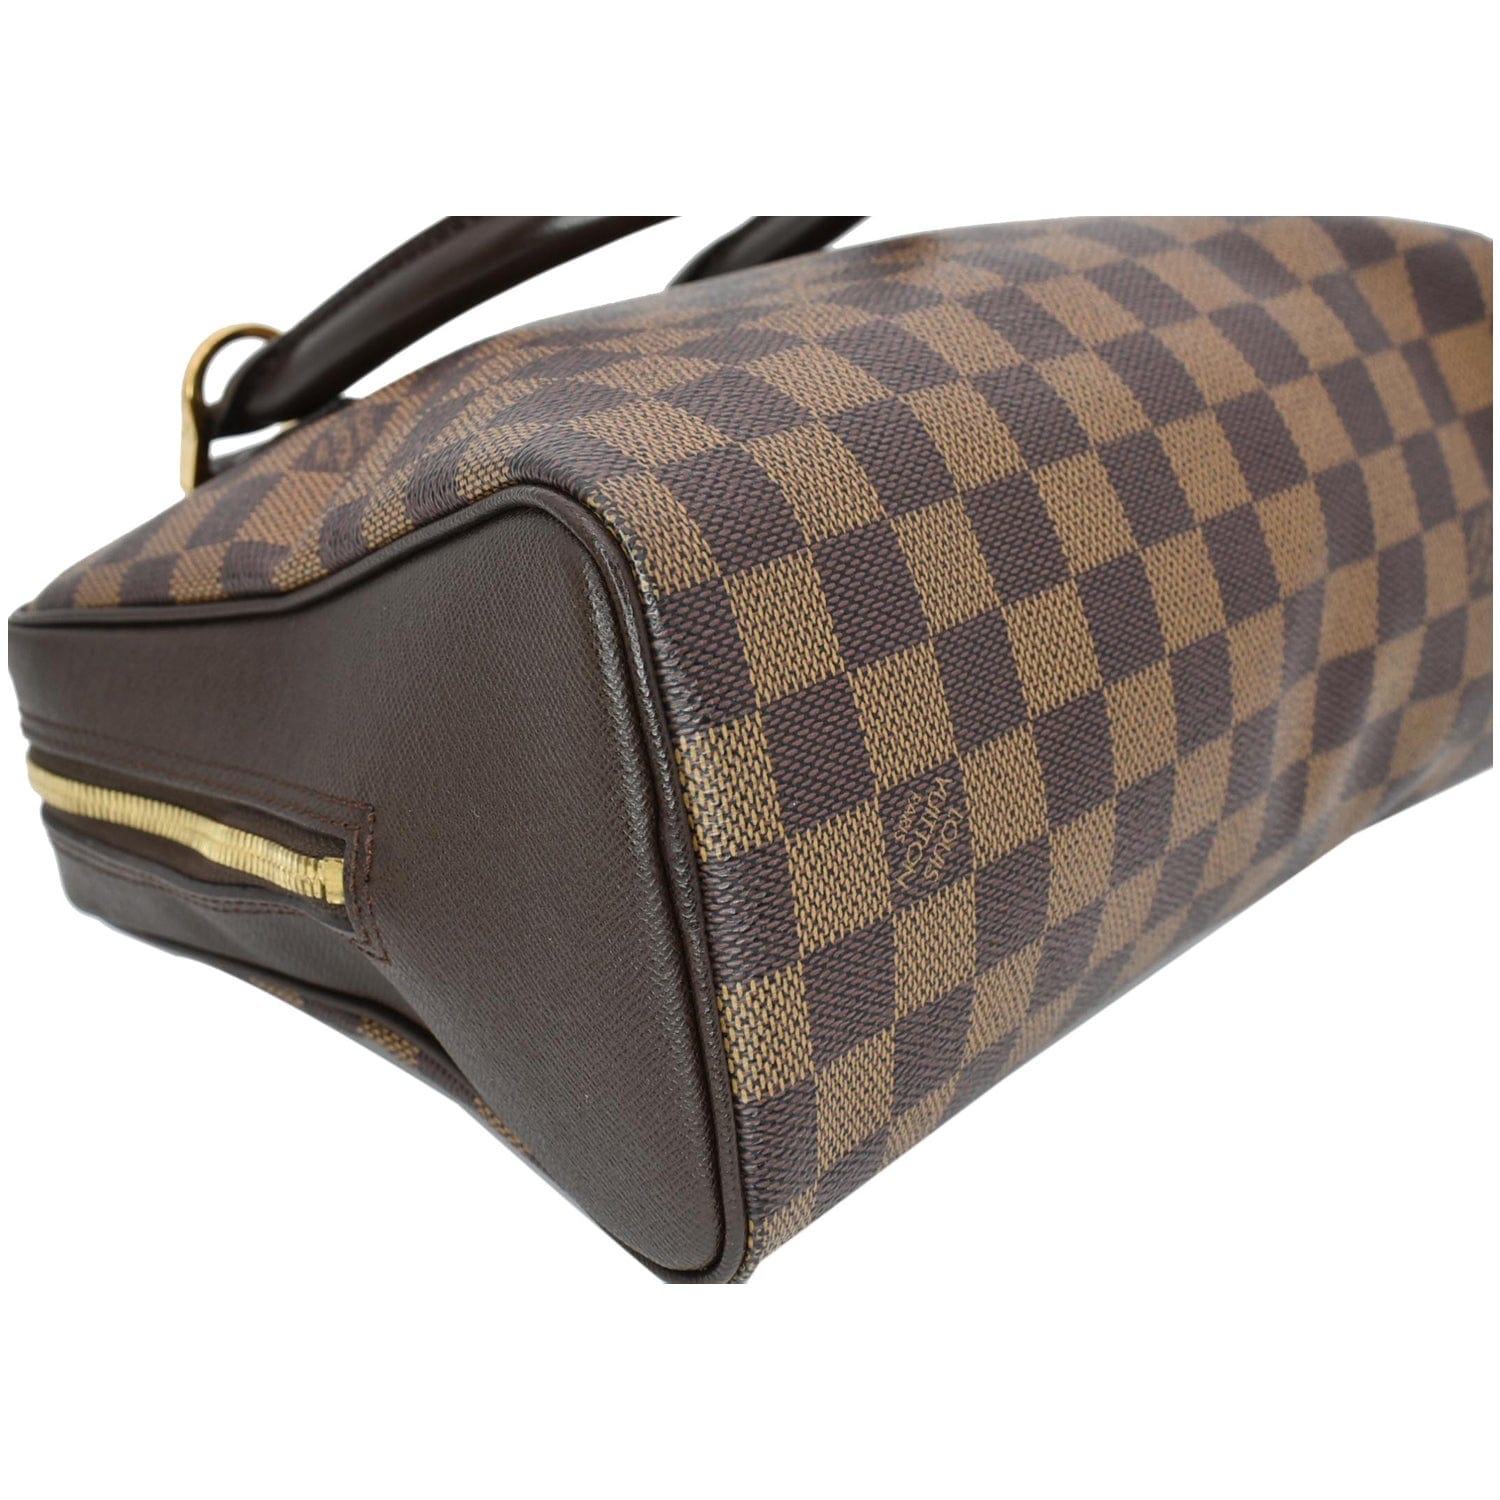 Louis Vuitton - Brera Tote Bag